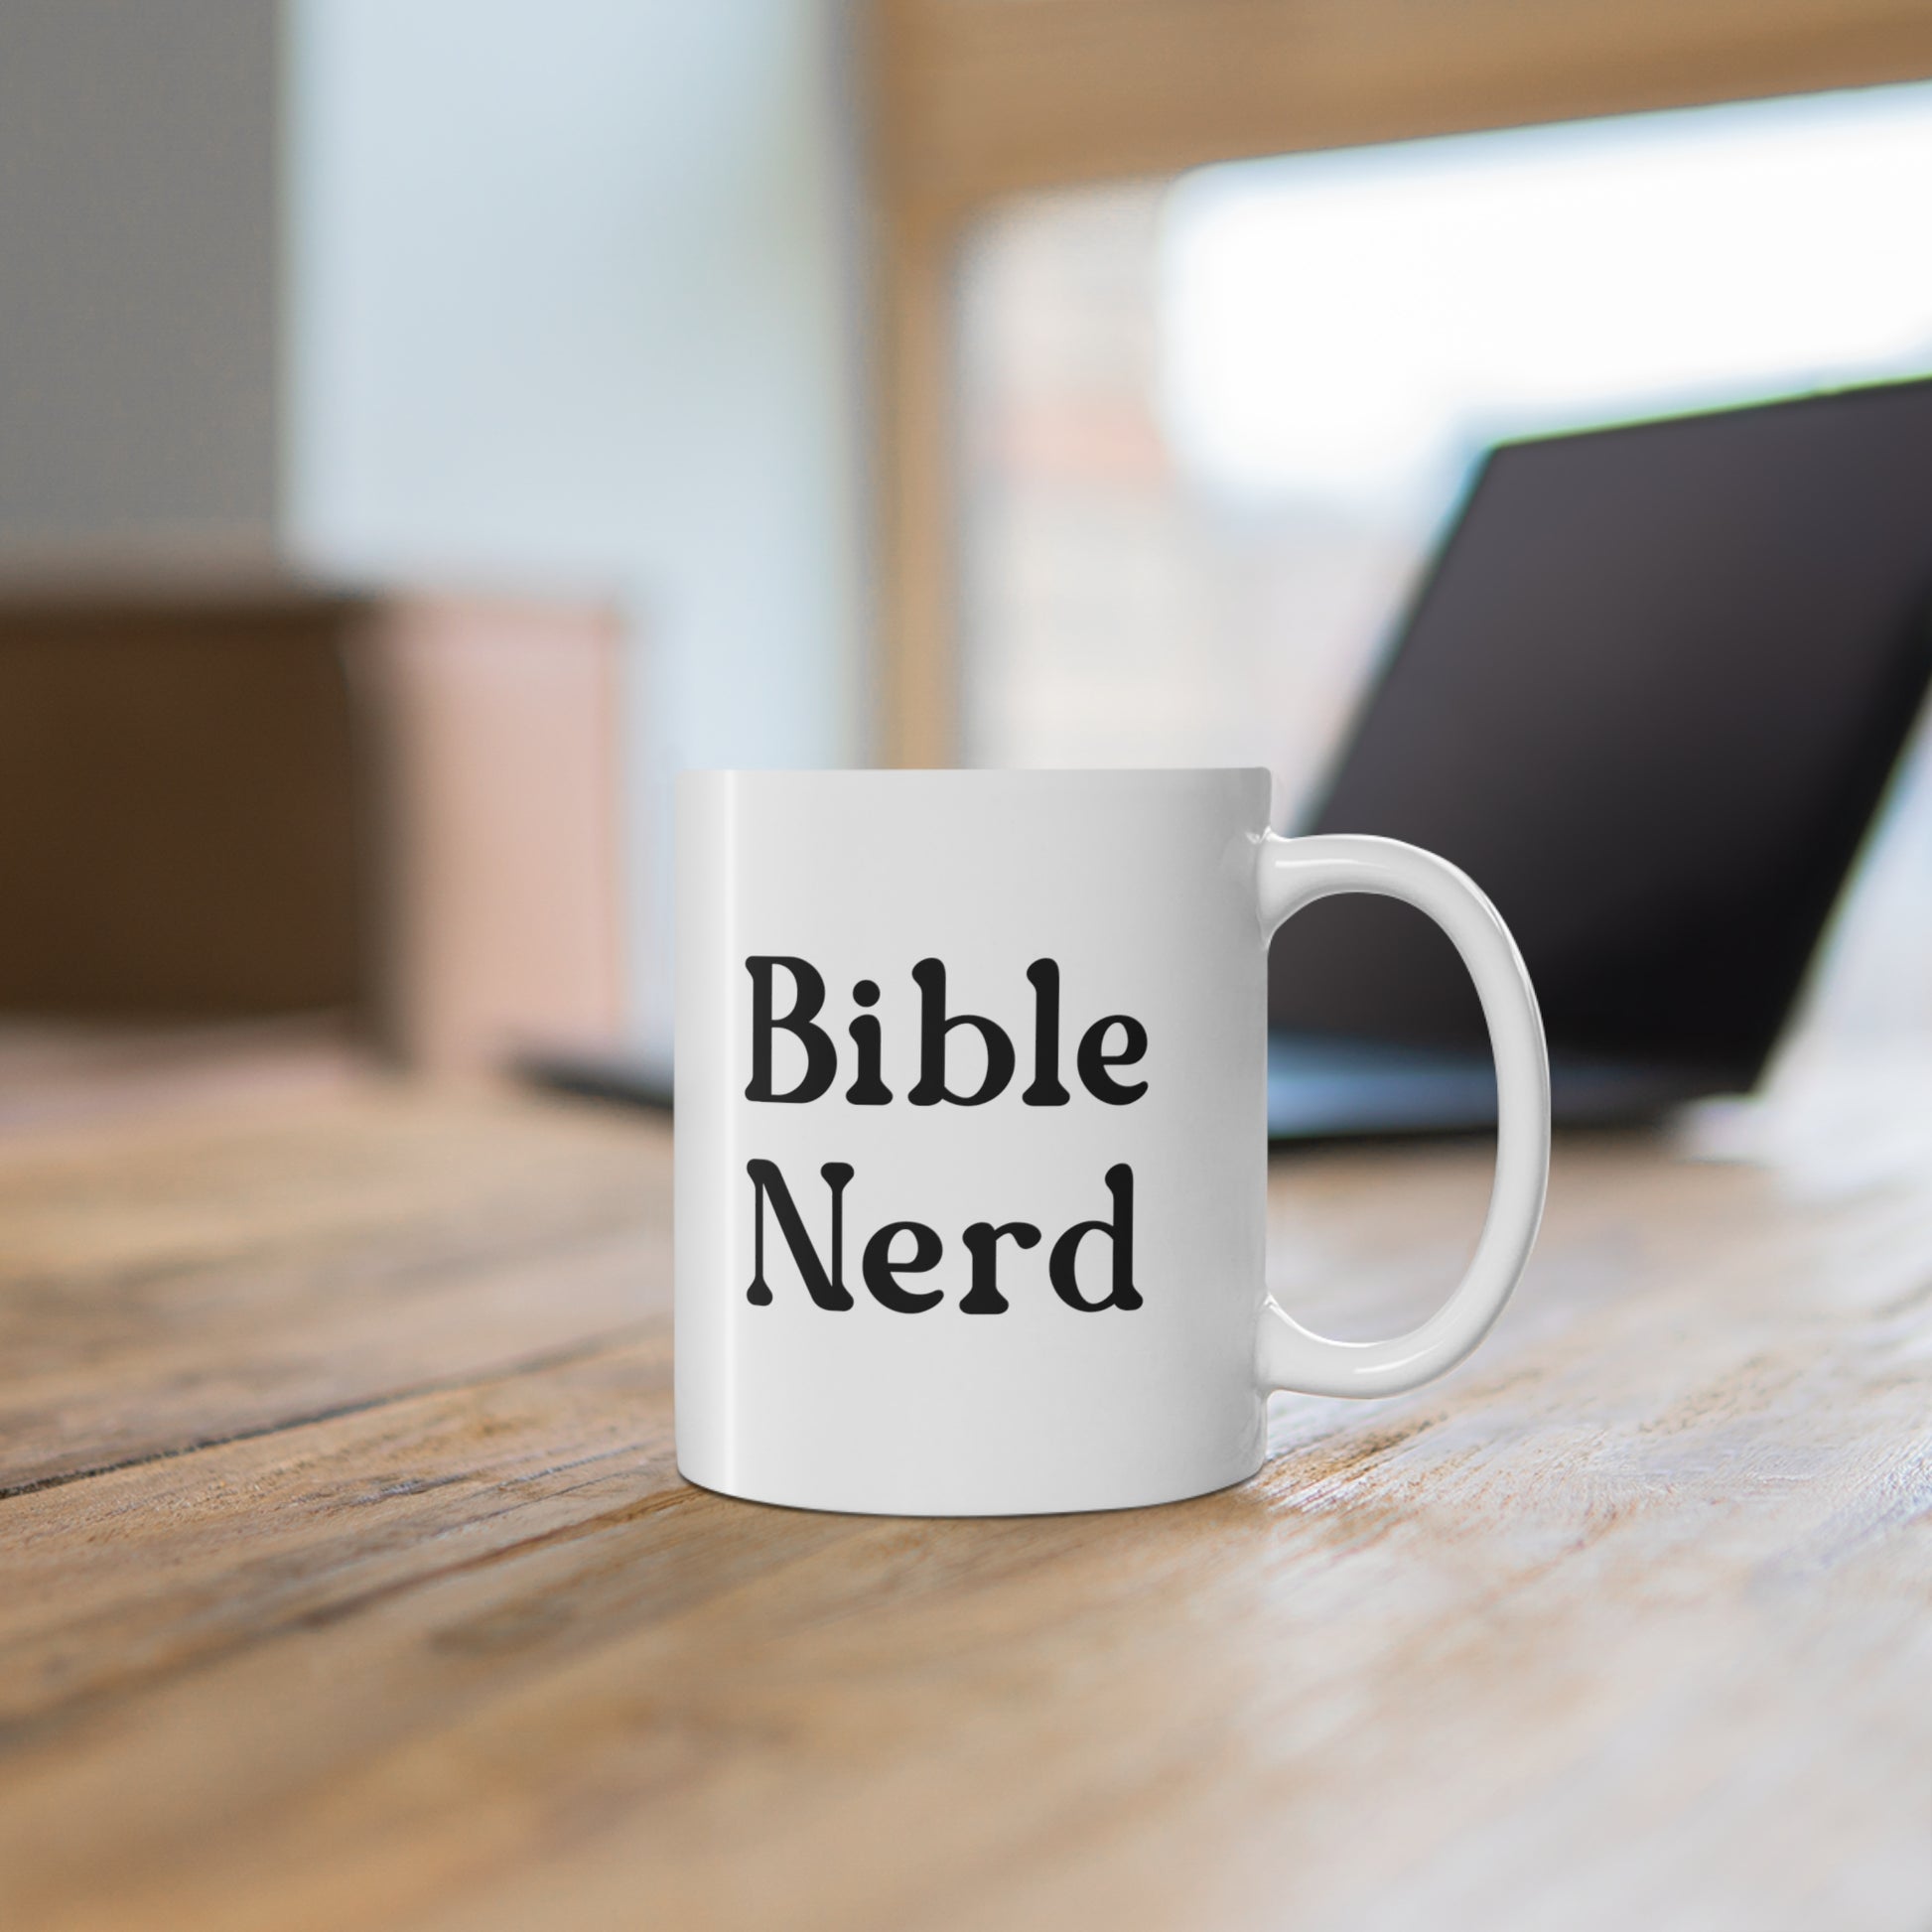 11oz ceramic mug with quote Bible Nerd